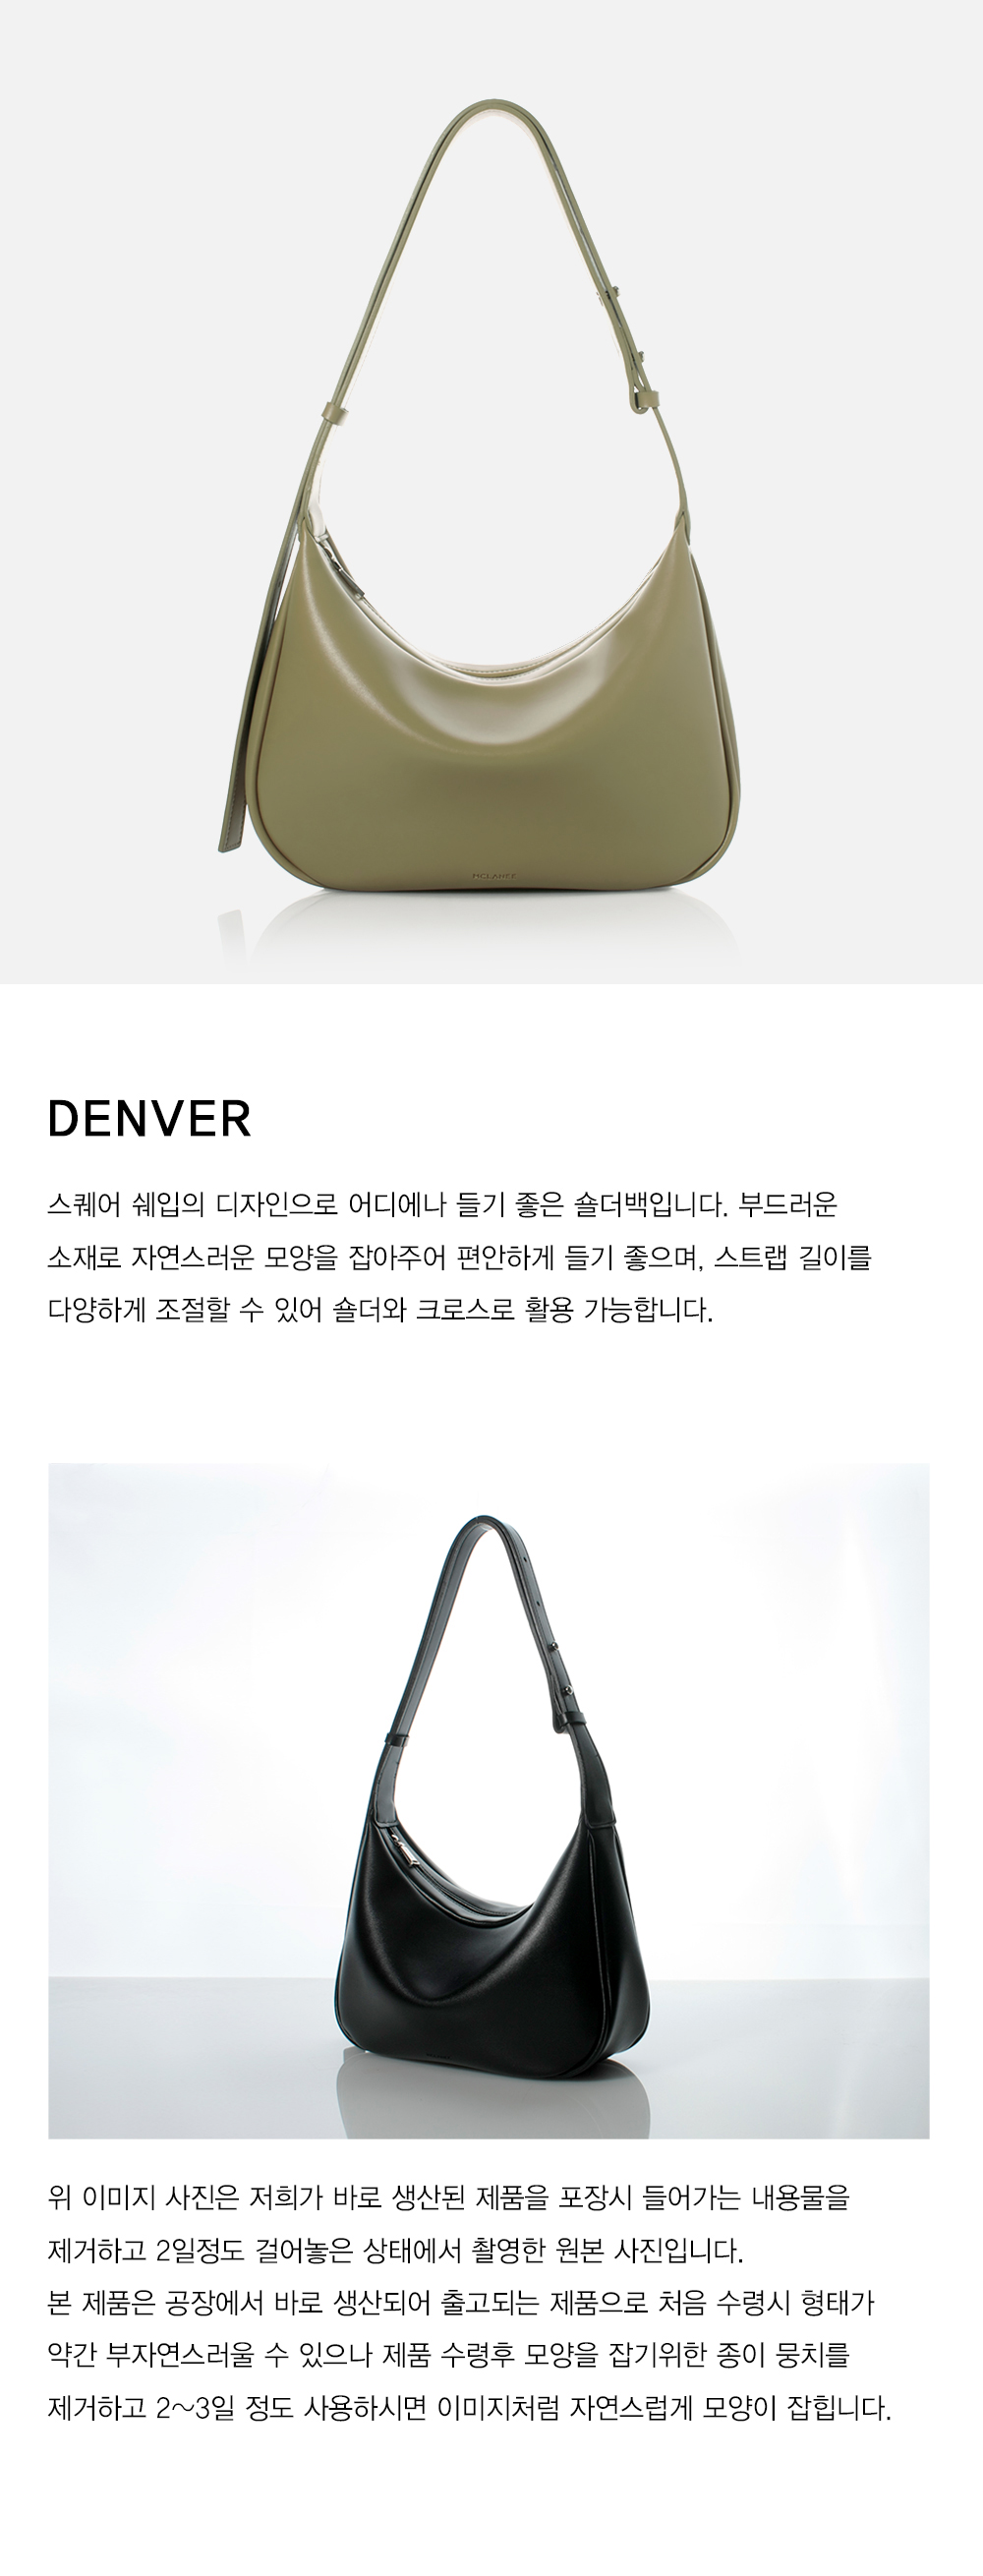 [MCLANEE] Denver shoulder and cross bag - Khaki